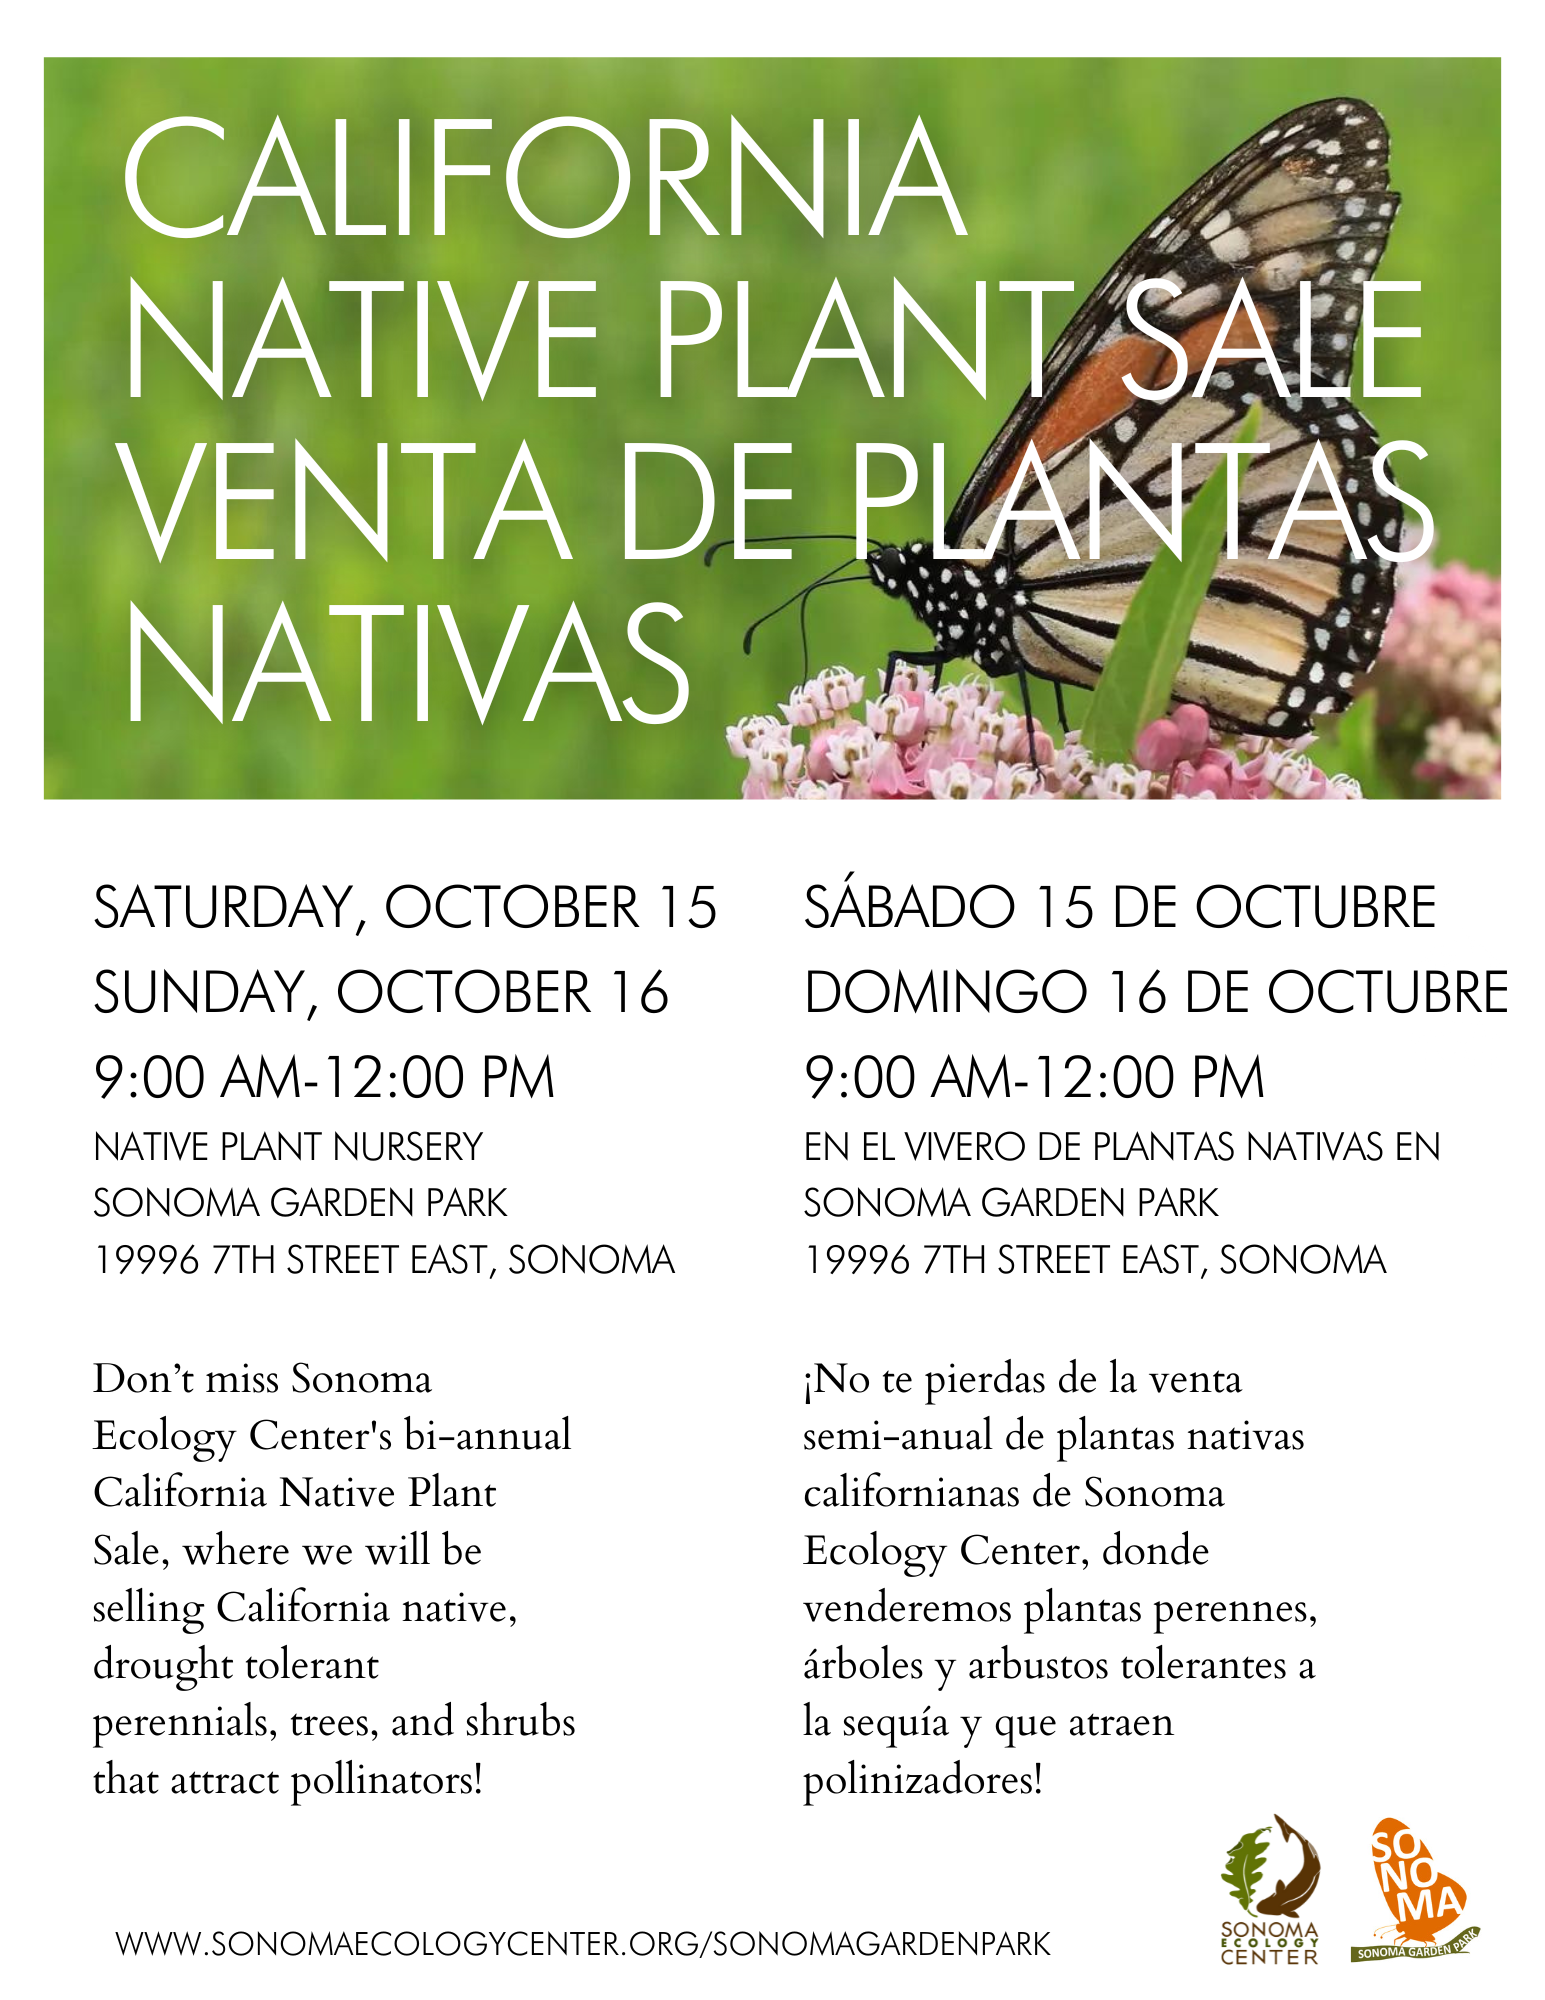 California Native Plant Sale – Venta de Plantas Nativas @ Native Plant Nursery at Sonoma Garden Park